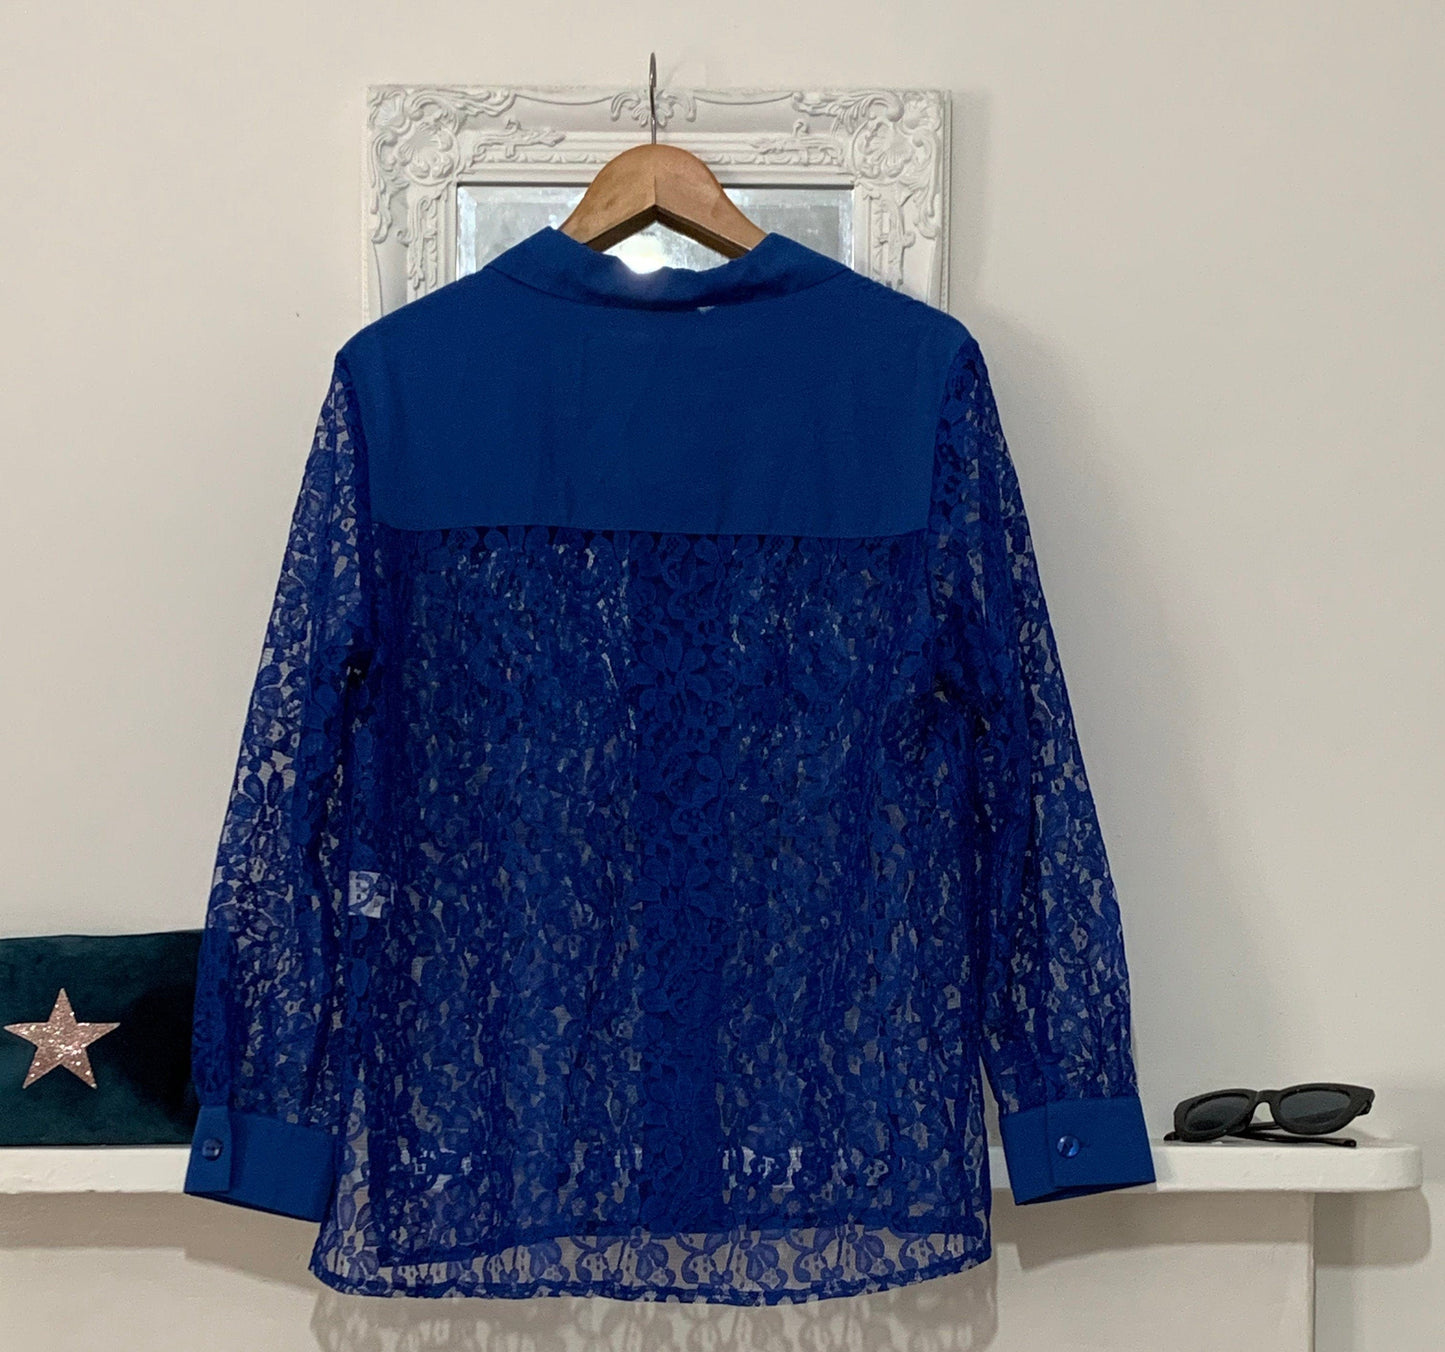 1970’s Vintage blouse 70s shirt lace electric blue pattern 50s style button through blouse collars rare plus size